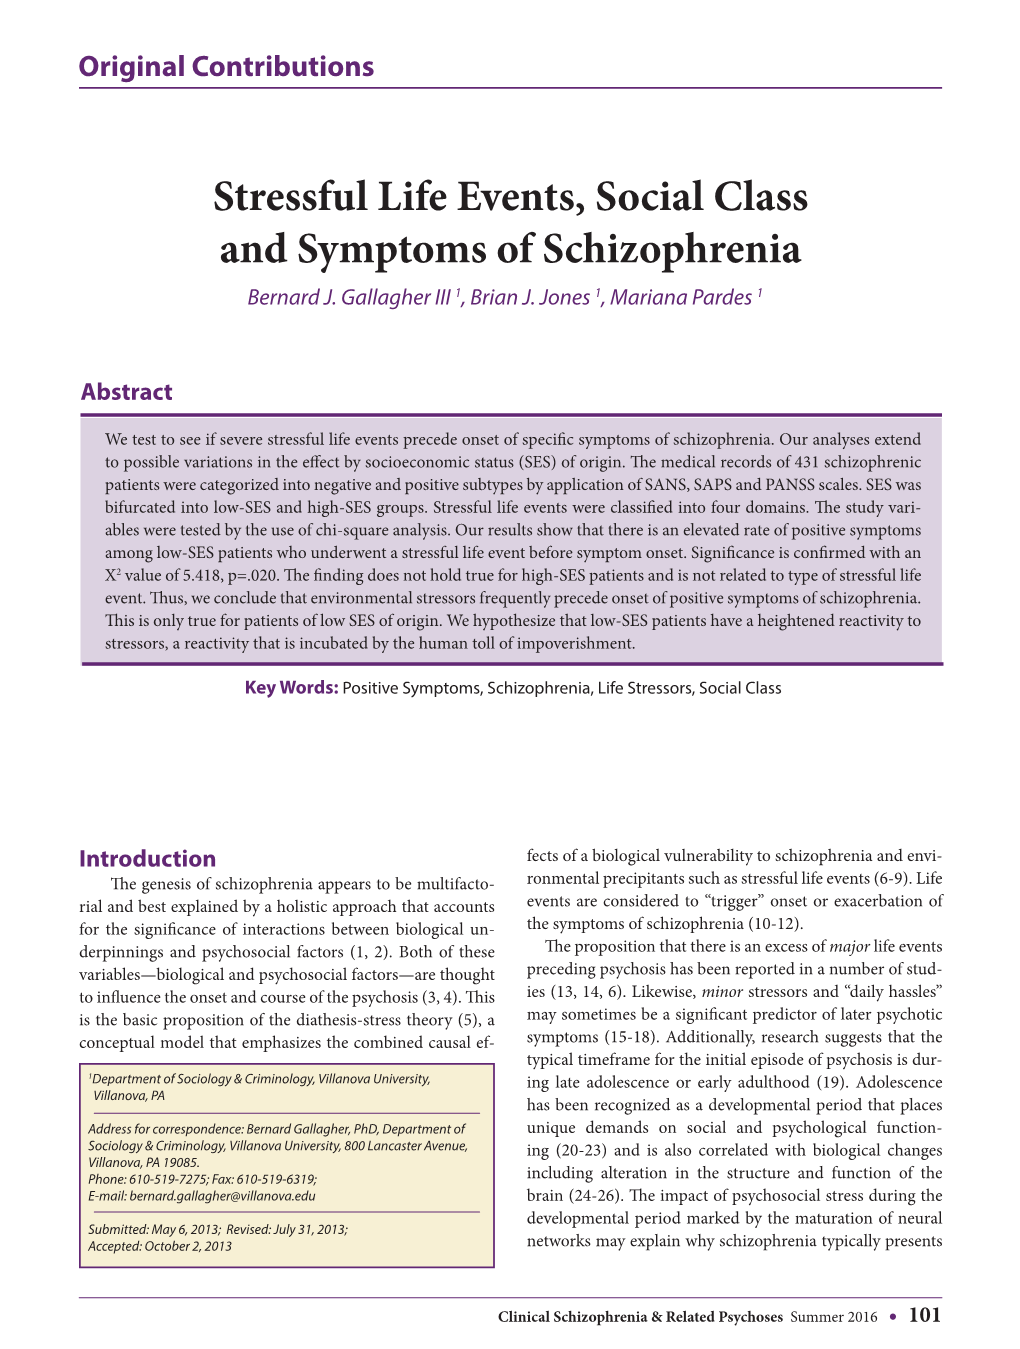 Stressful Life Events, Social Class and Symptoms of Schizophrenia Bernard J